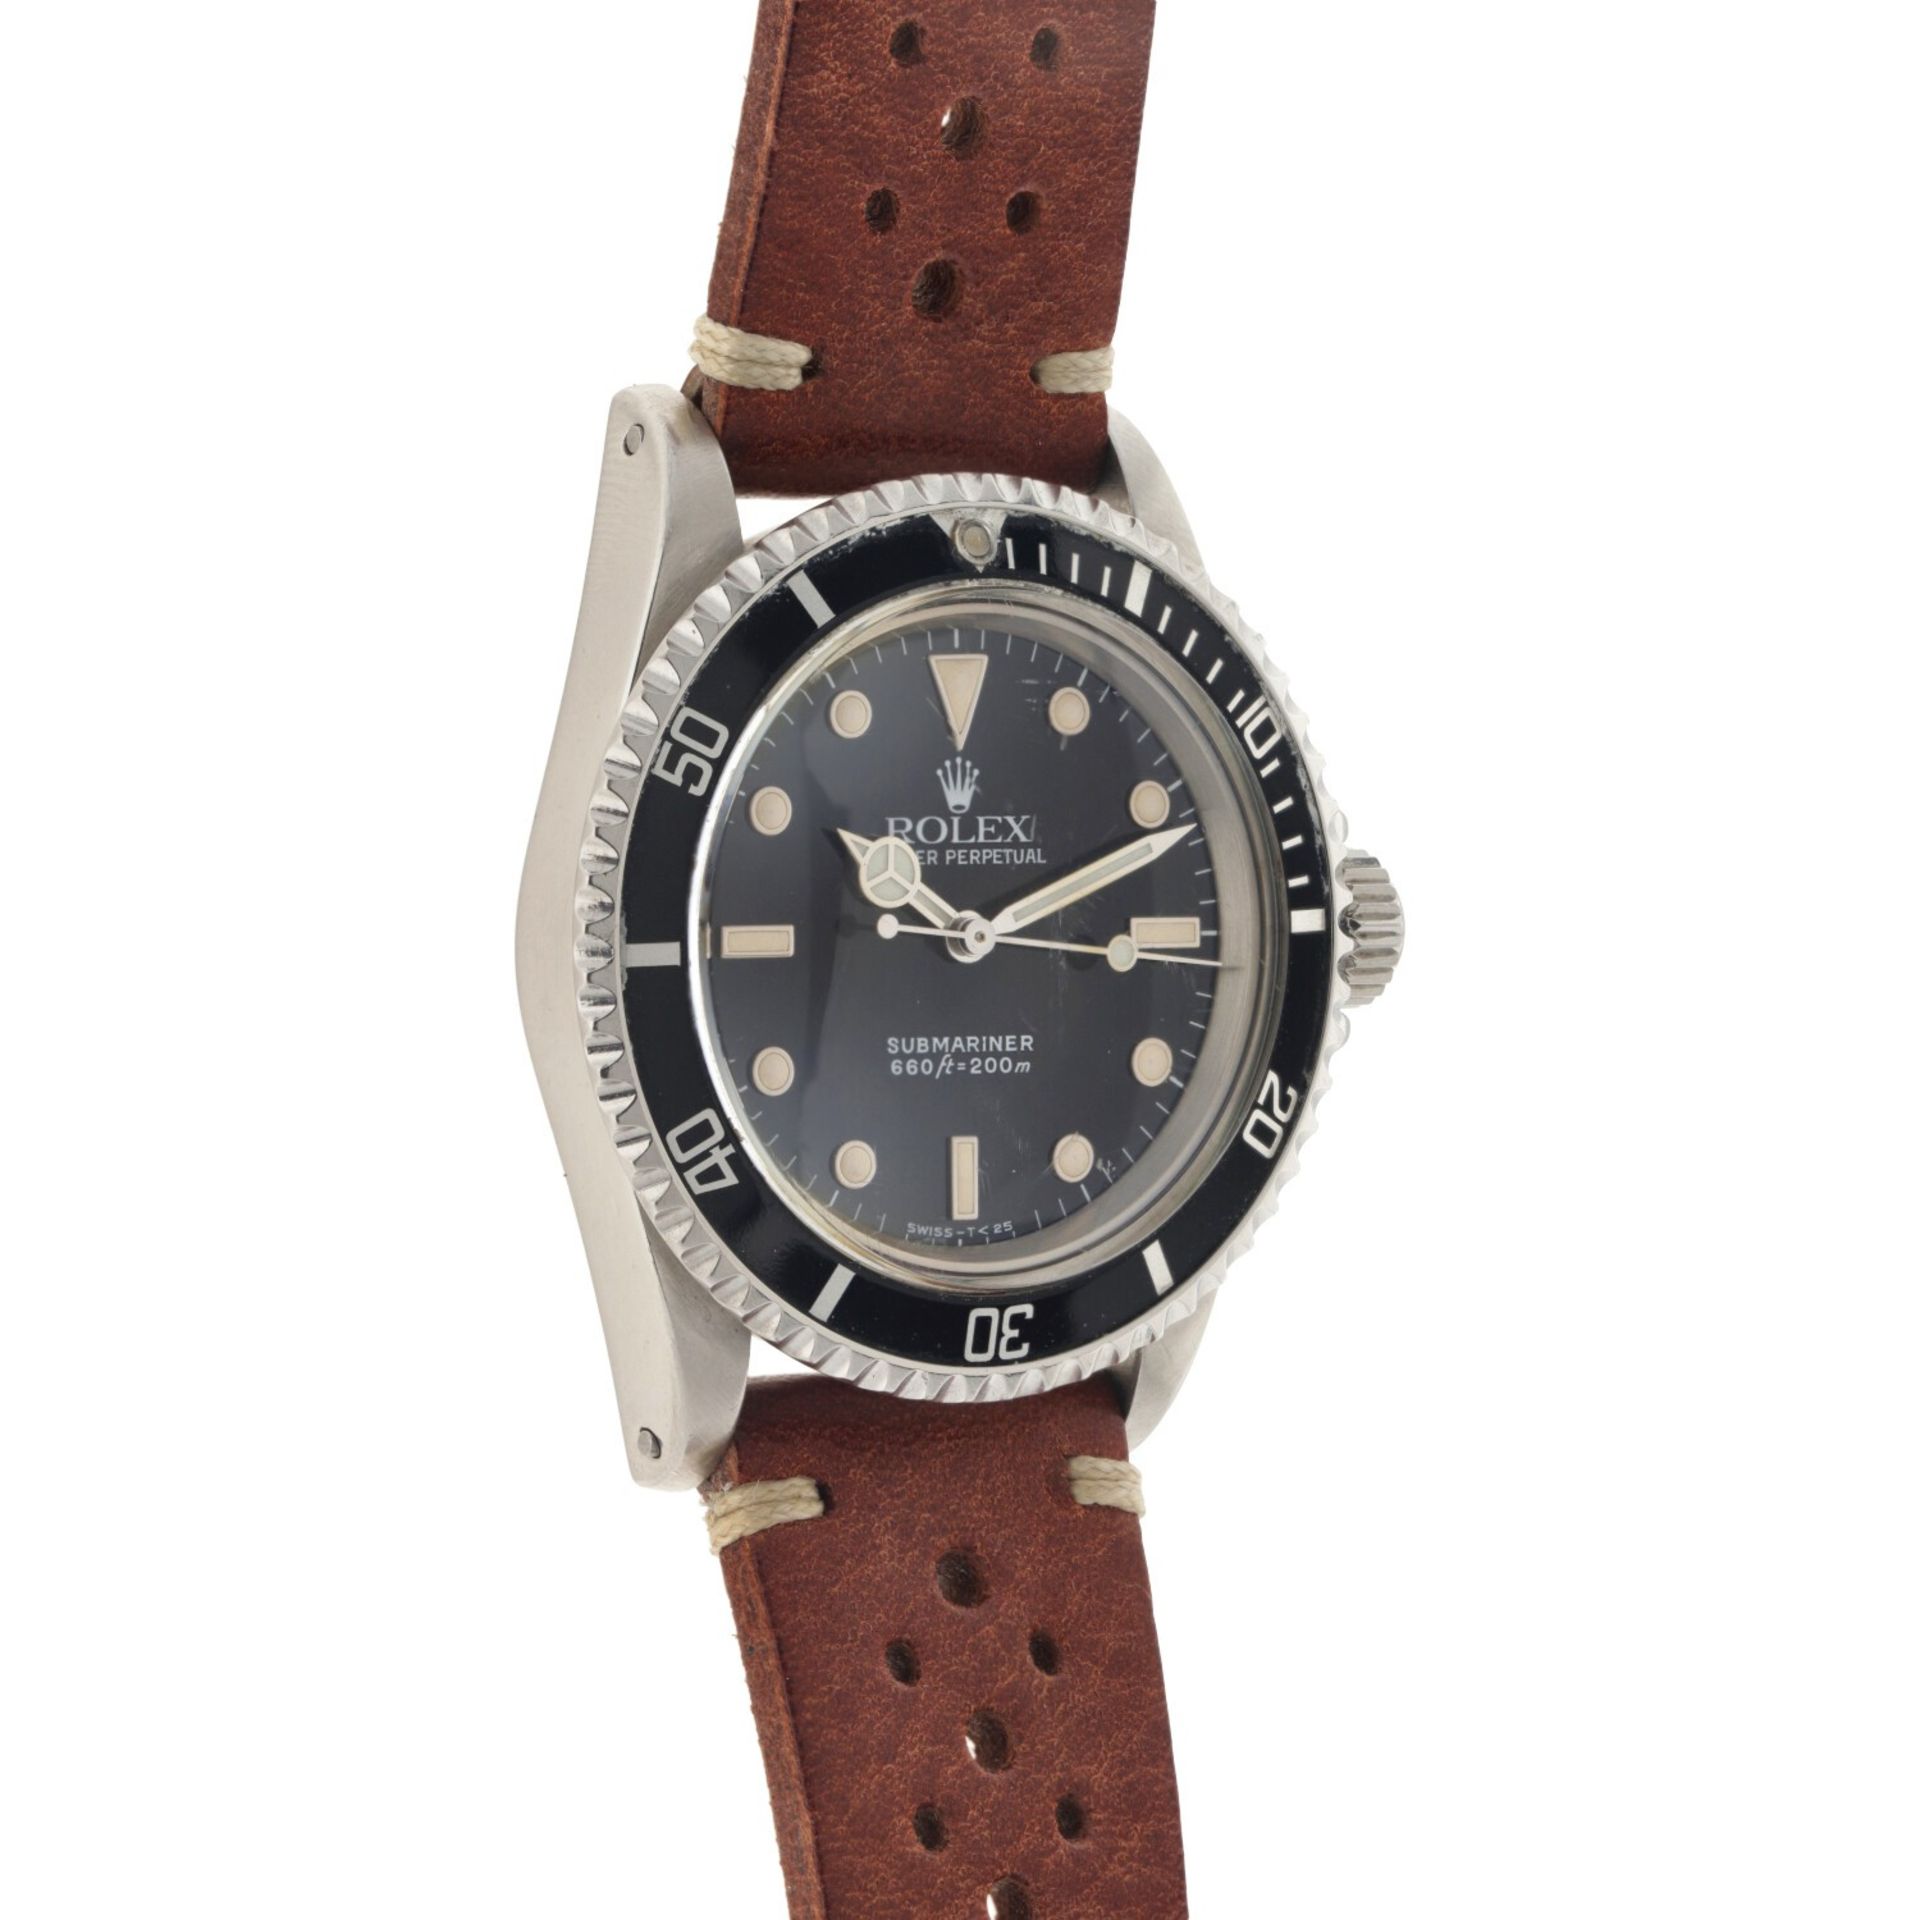 Rolex Submariner 5513 ''Spider'' Dial - Men's watch - 1988. - Image 5 of 9